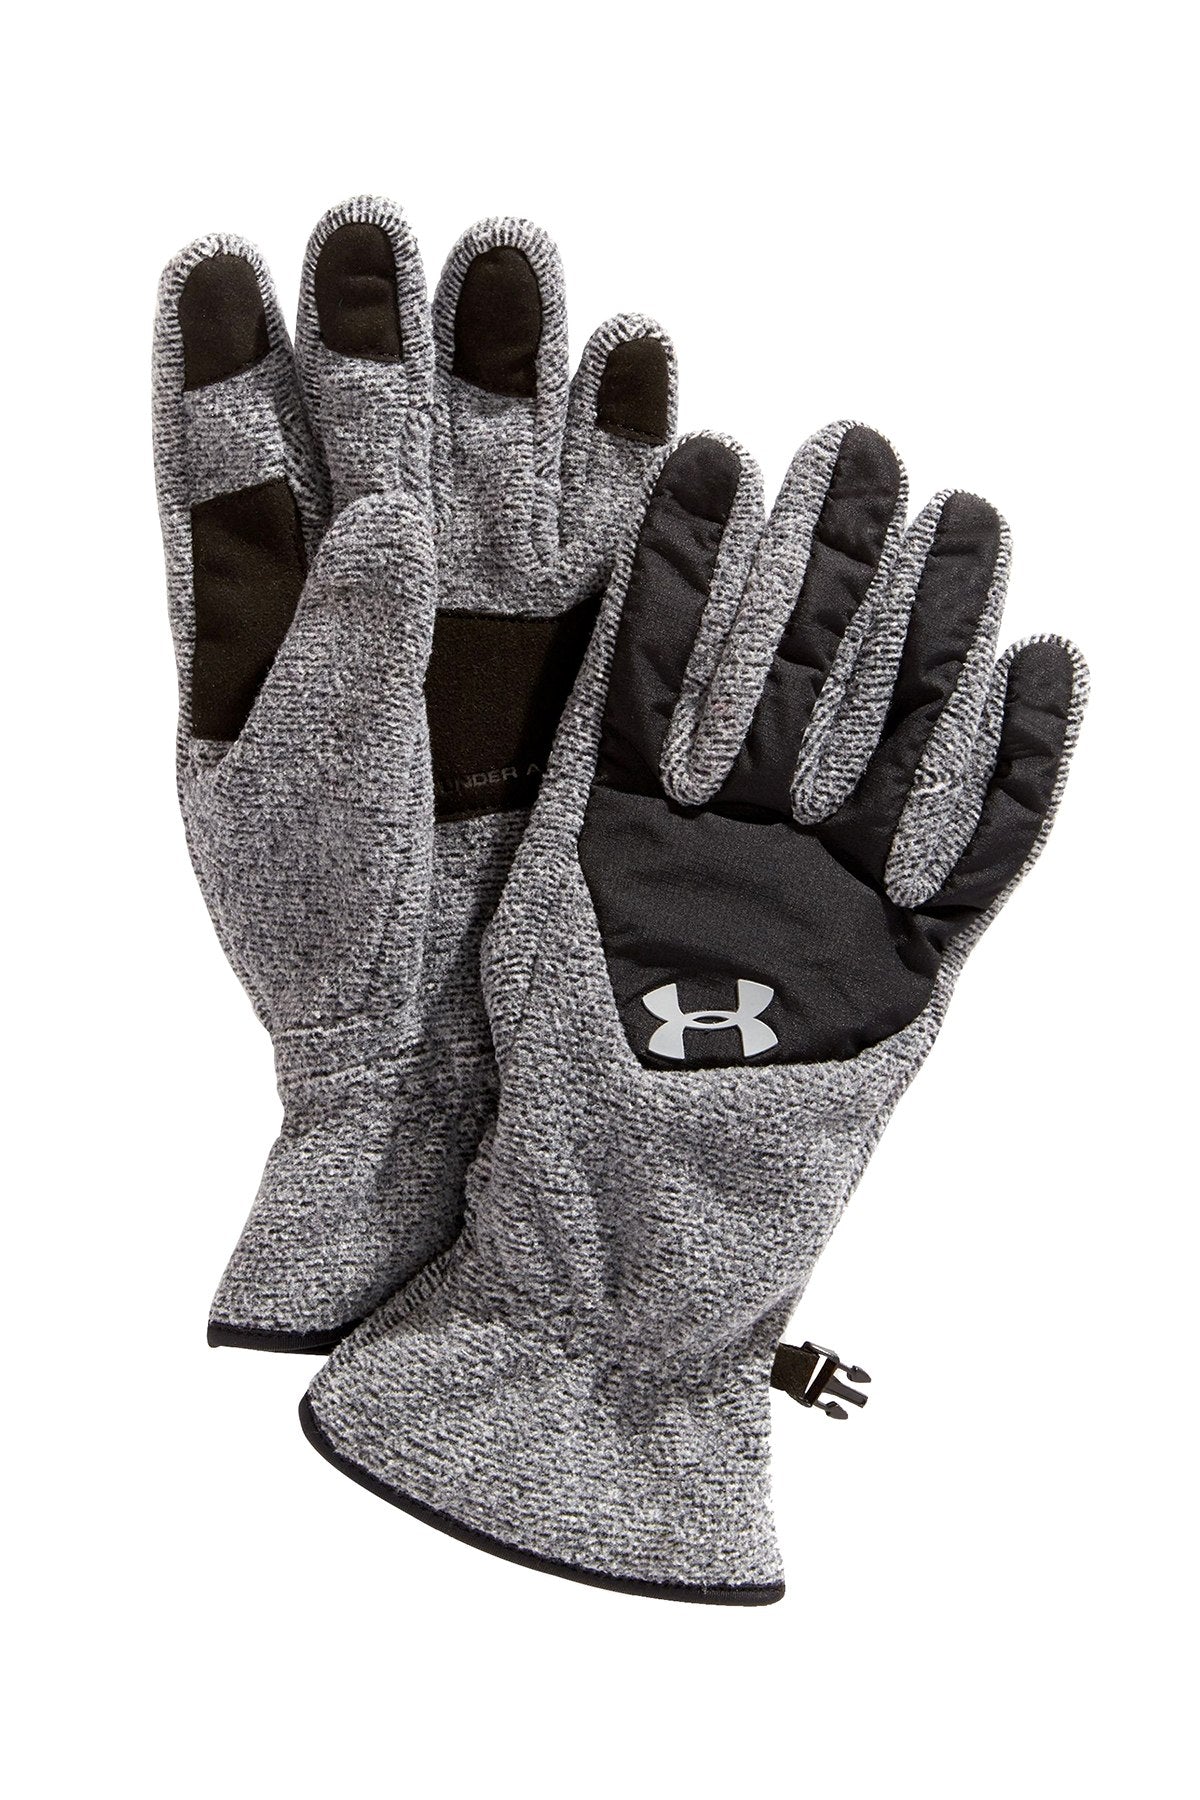 Under Armour Black/Grey ColdGear Survivor Fleece Gloves